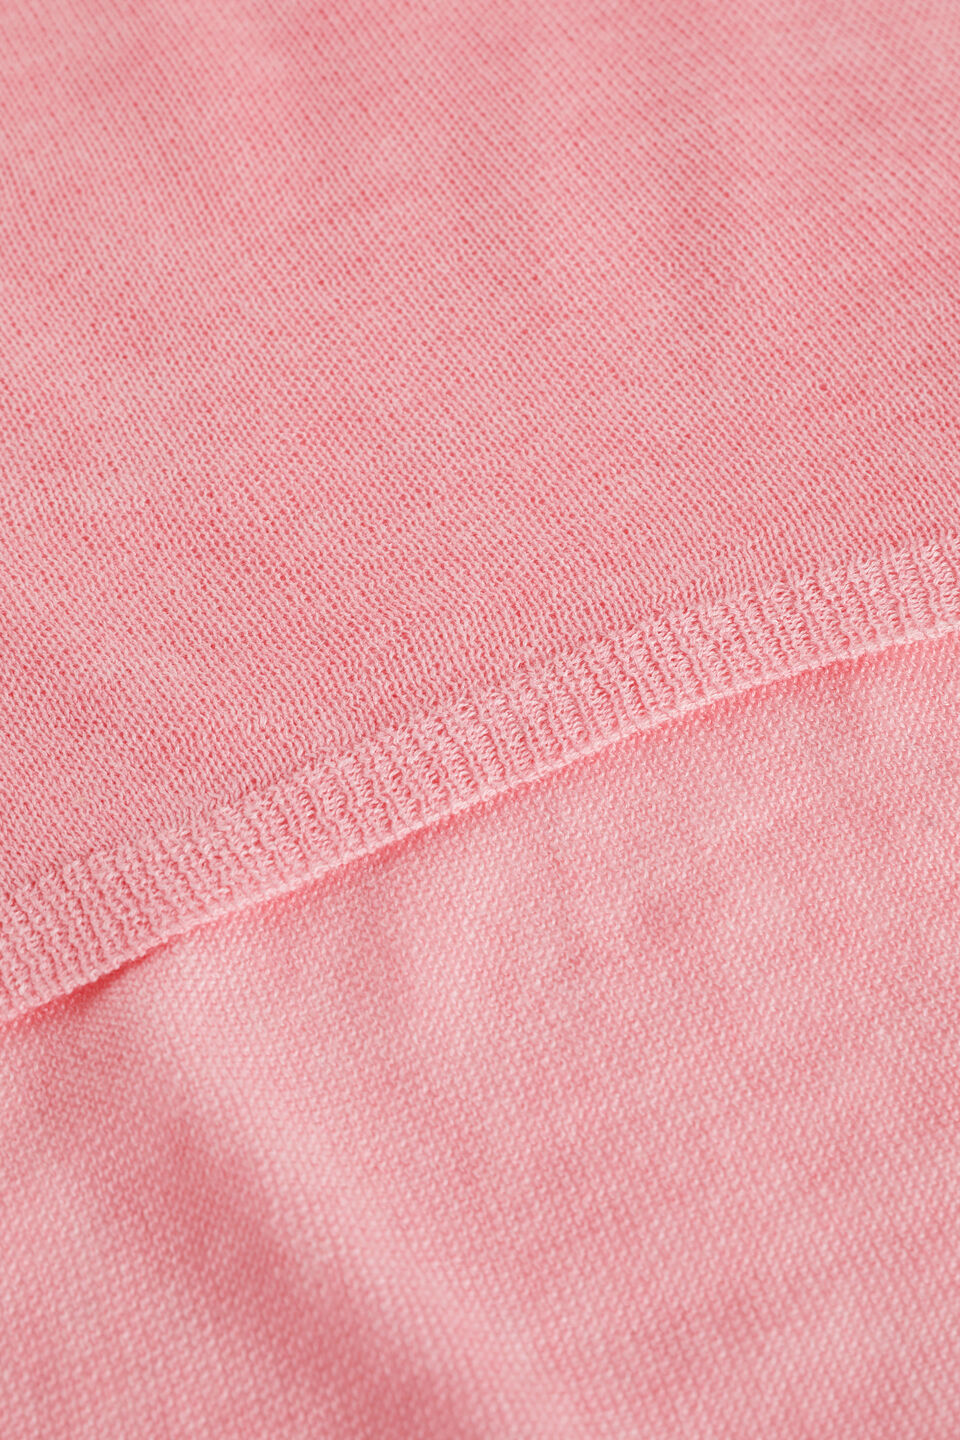 Fine Knit Wrap  Bubblegum Pink